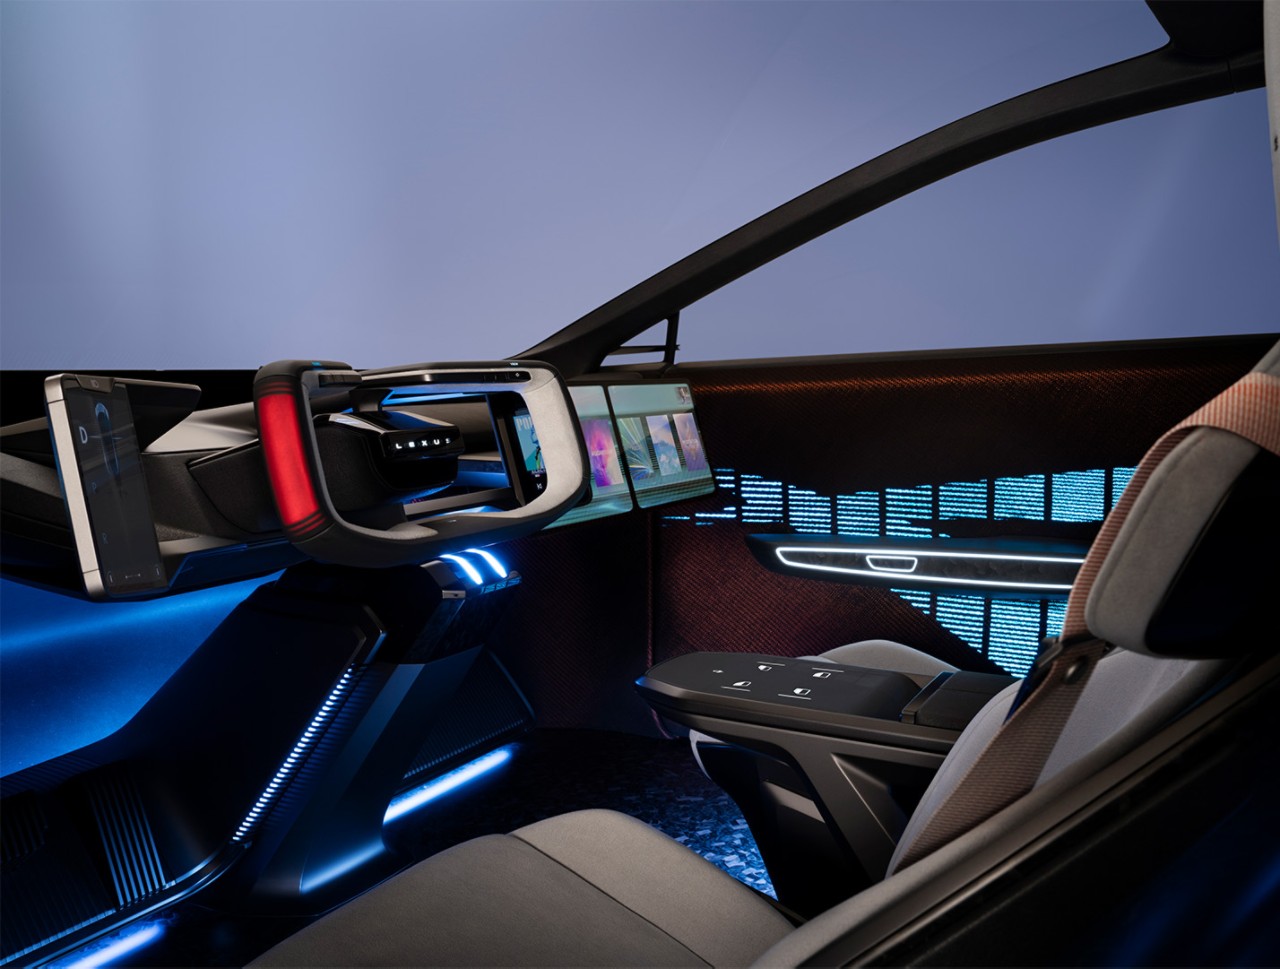 The inside of the Lexus LF-ZC Concept car